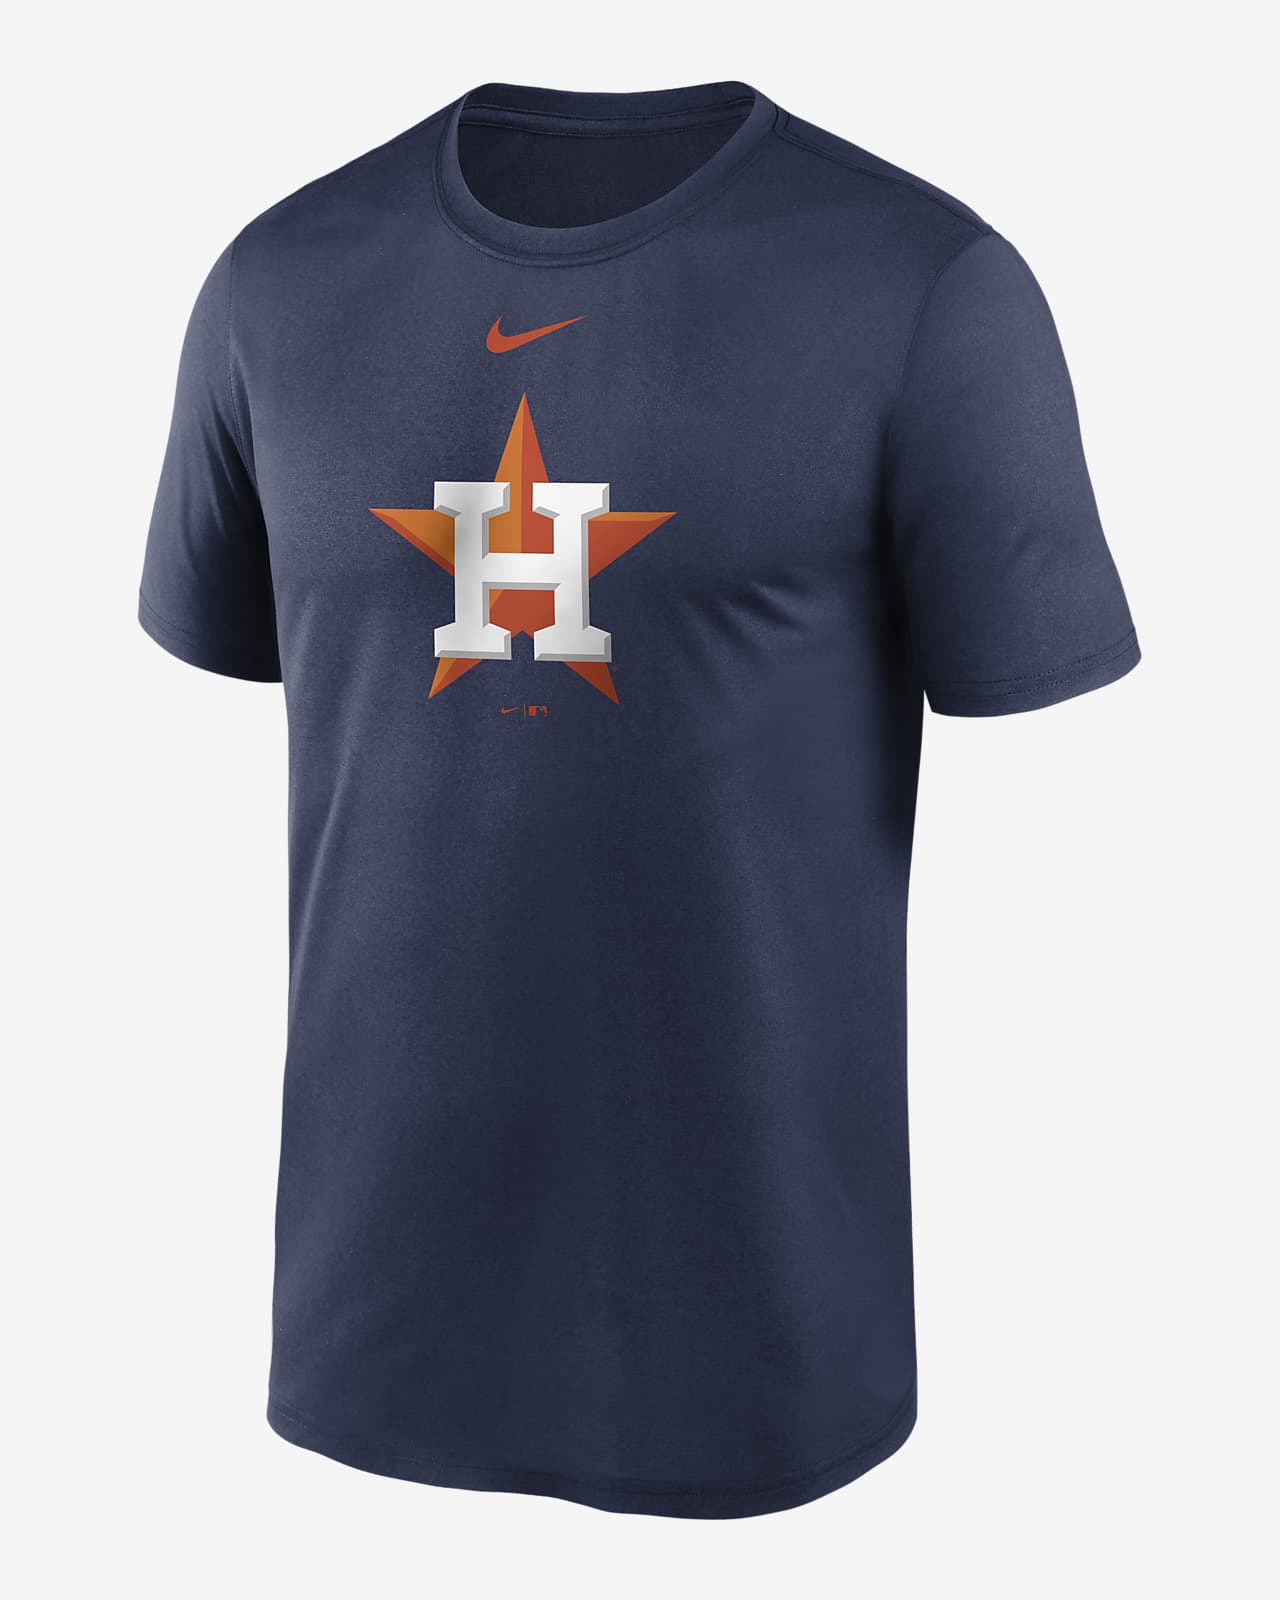 Nike Dri-FIT Logo Legend (MLB Houston Astros) Men's T-Shirt. 